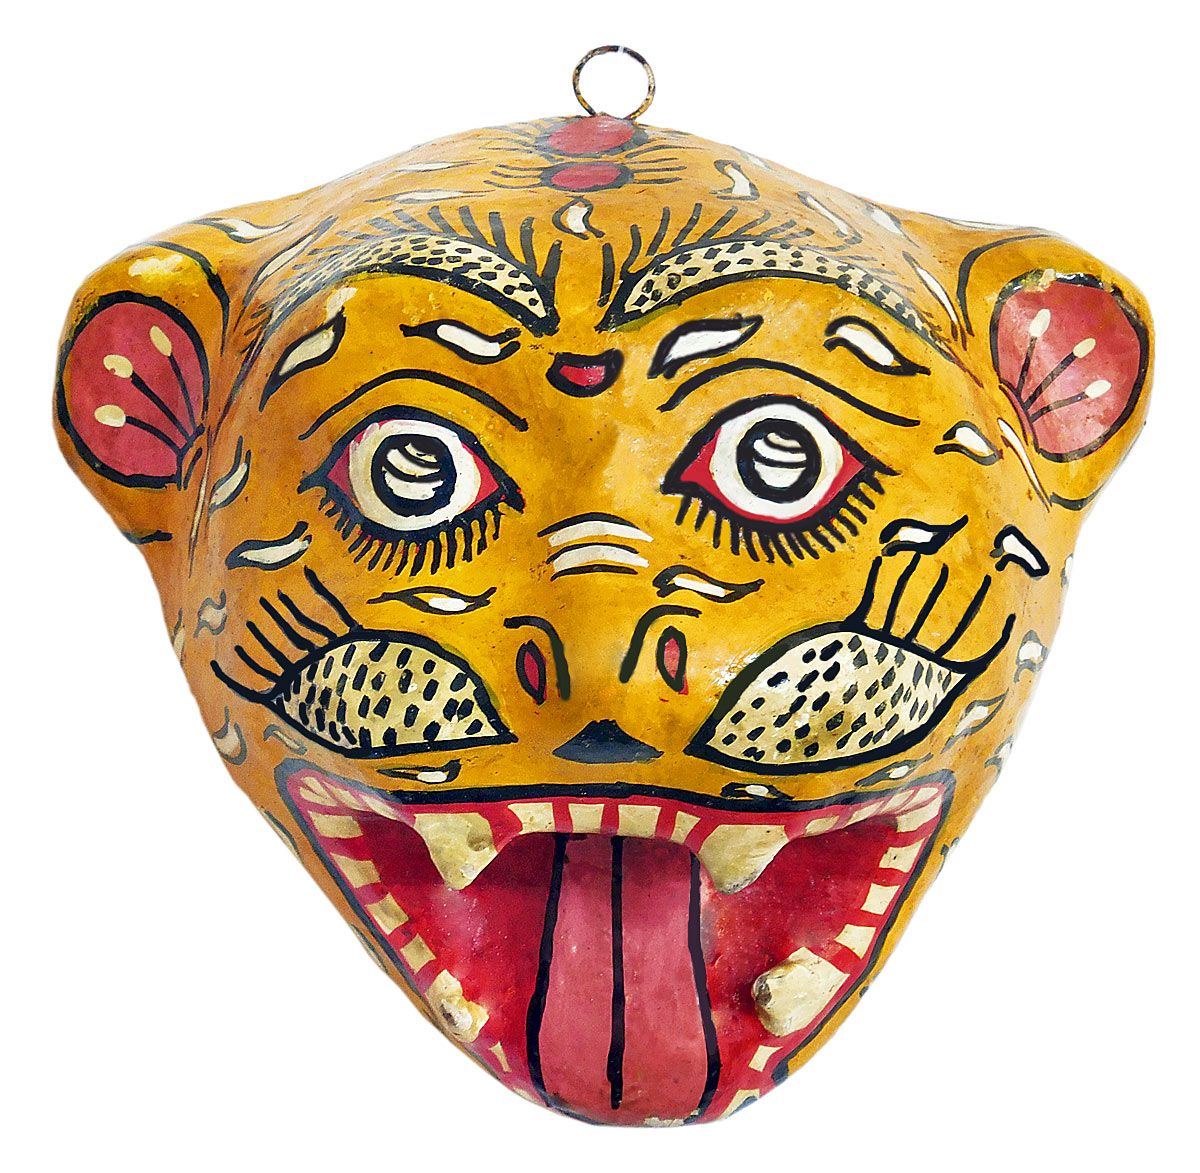 https://cdn.dollsofindia.com/images/p/papier-mache-statues/tiger-mask-OR77_l.jpg